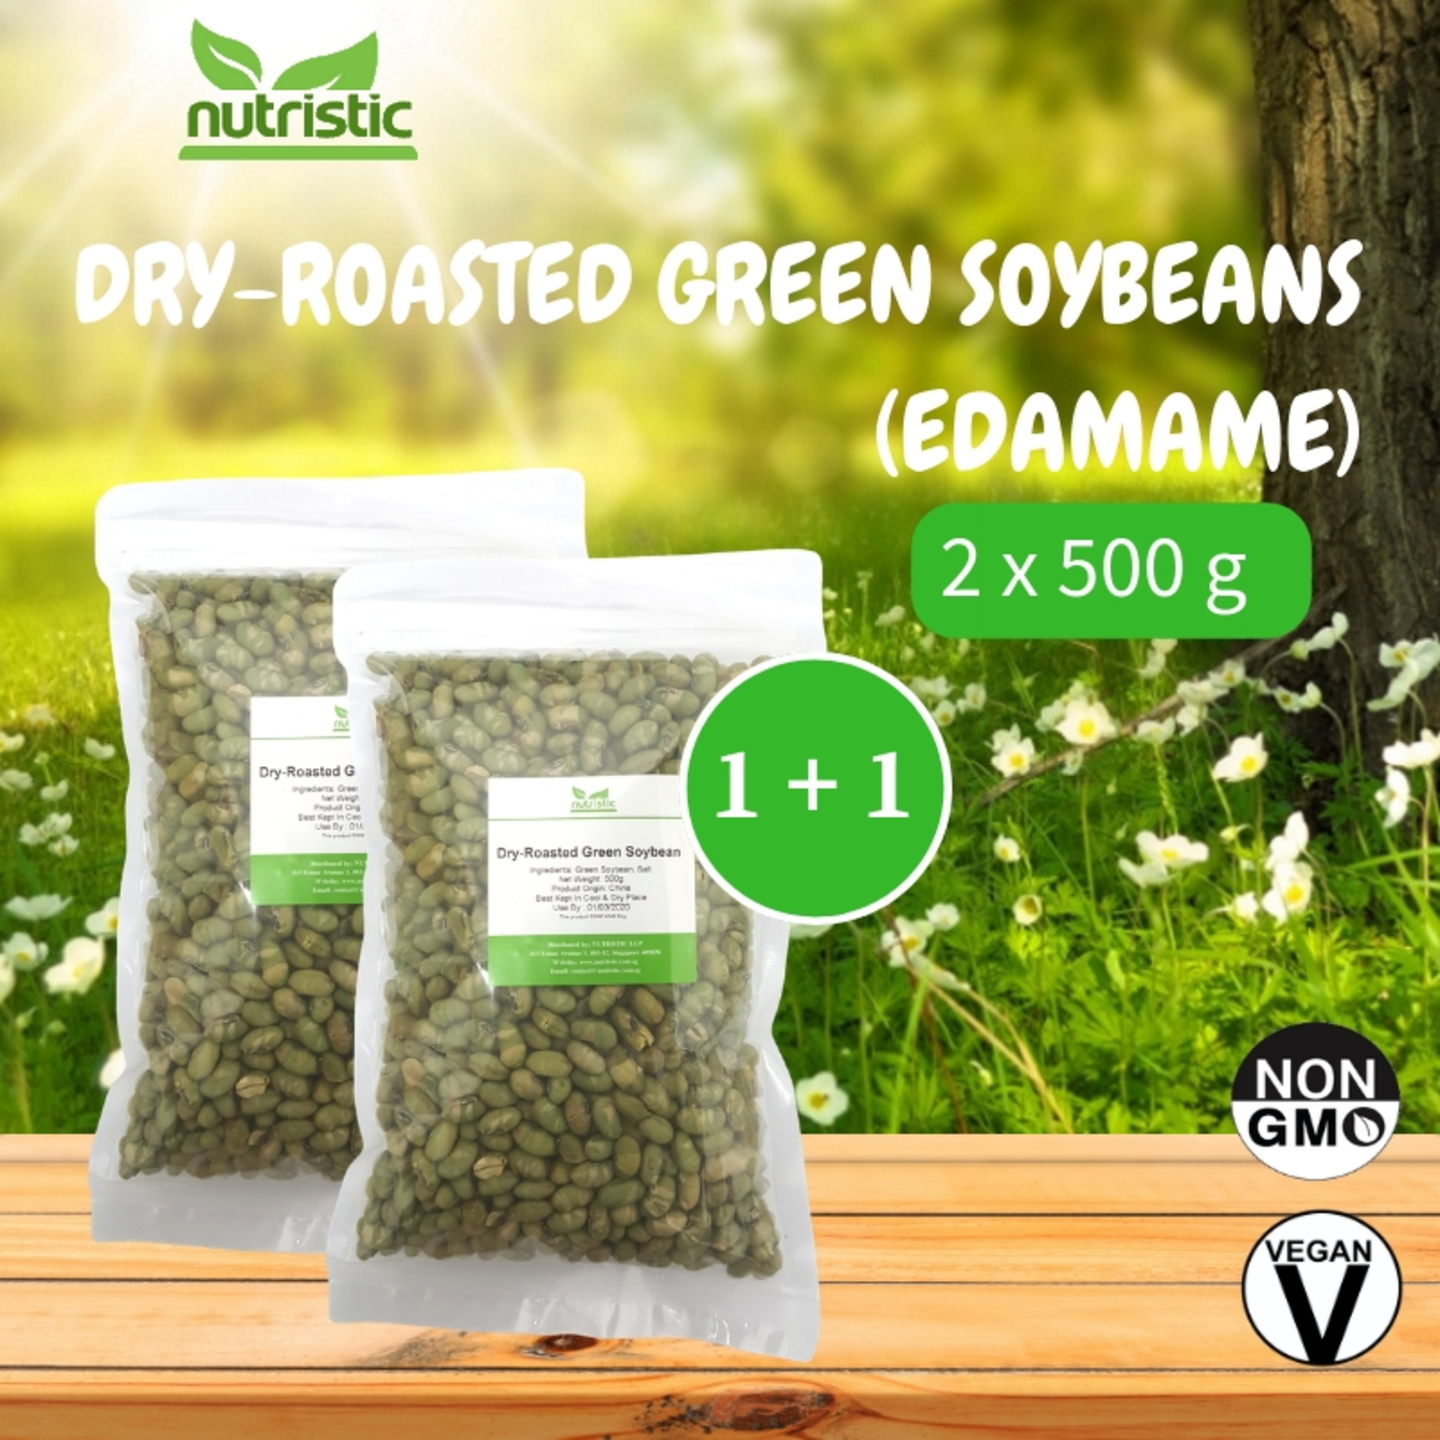 Dry-Roasted Green Soybeans Edamame 500g x2 - Value Bundle